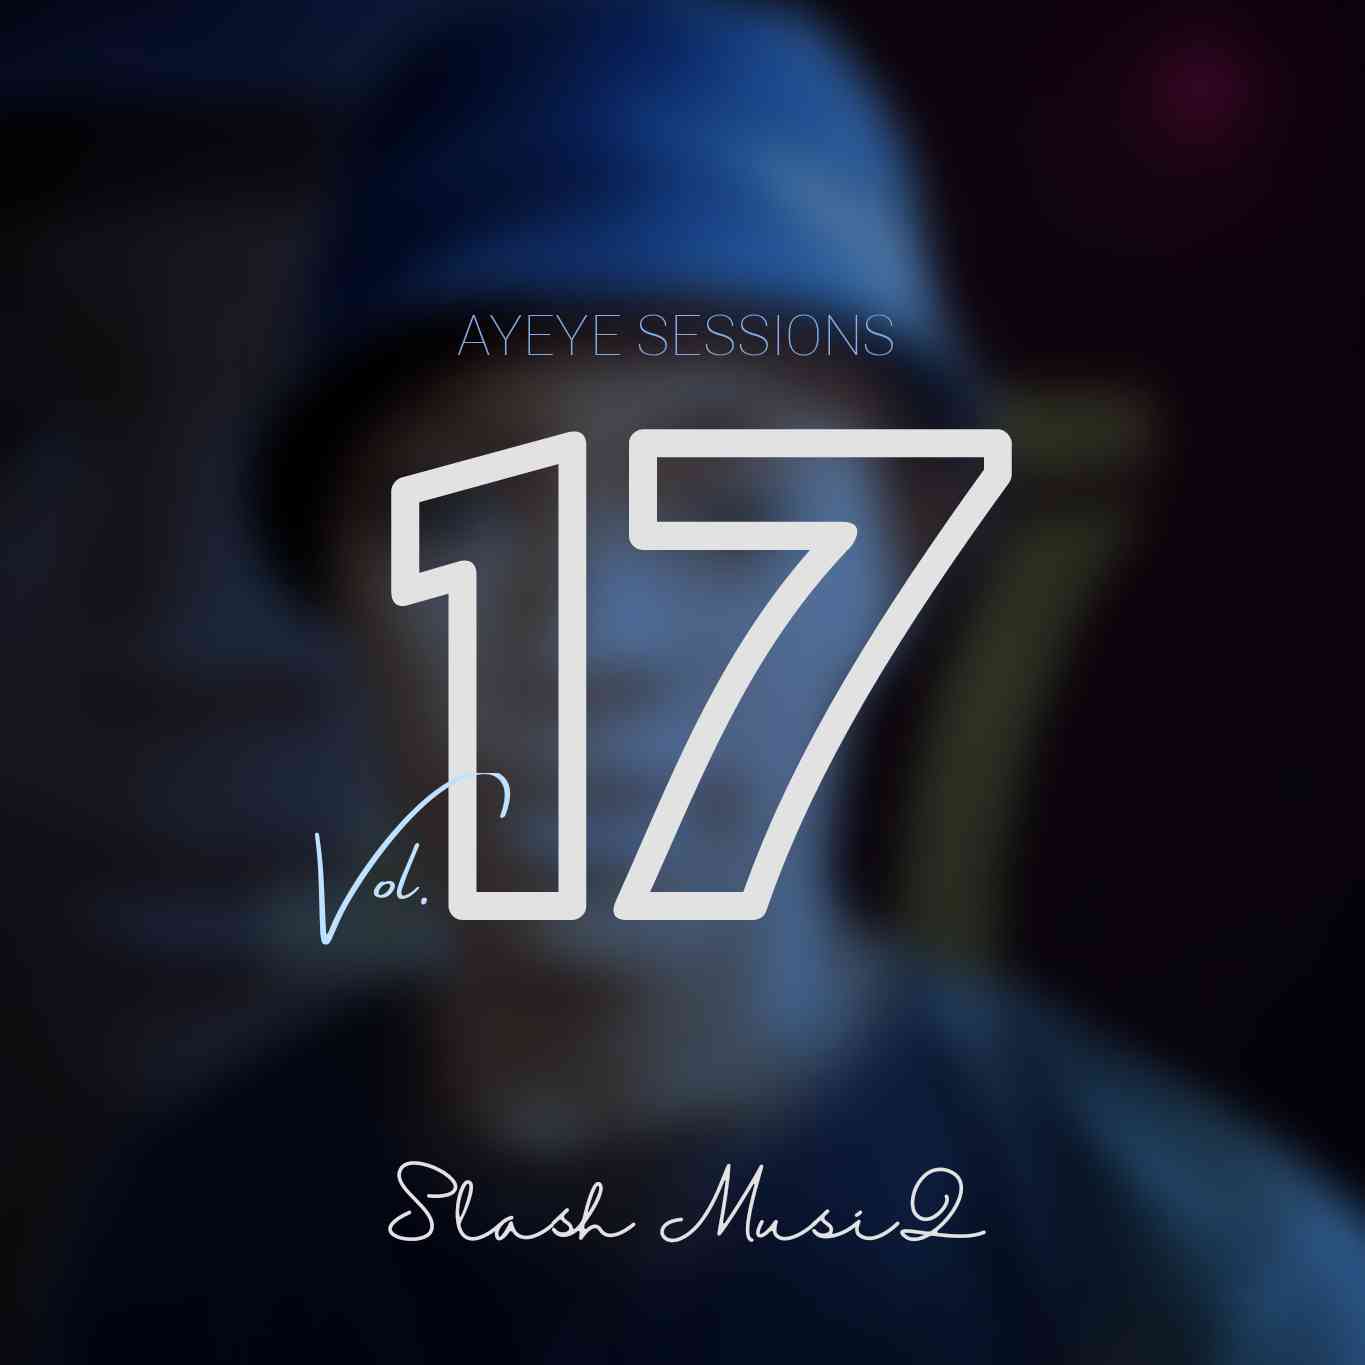 Slash MusiQ Ayeye Sessions Vol.17 (100% Production Mix)